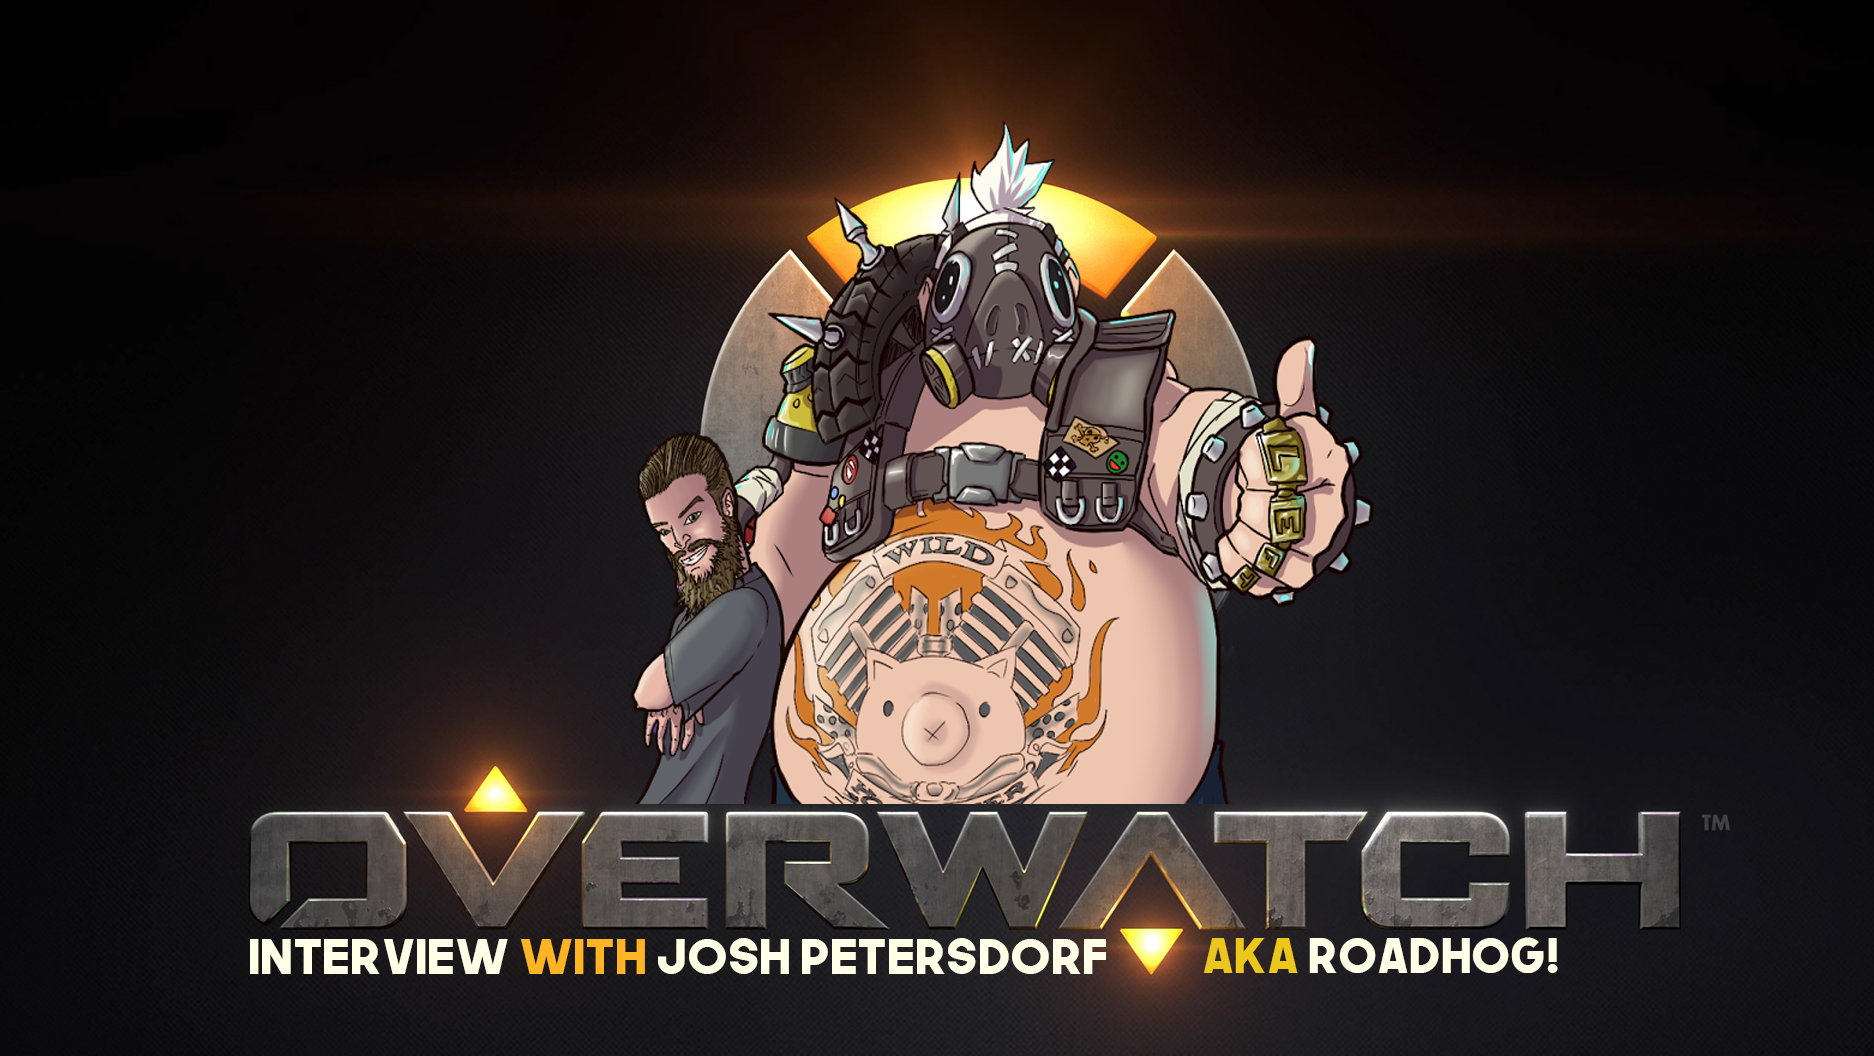 Interview: Josh Petersdorf, a.k.a. Overwatch’s Roadhog!